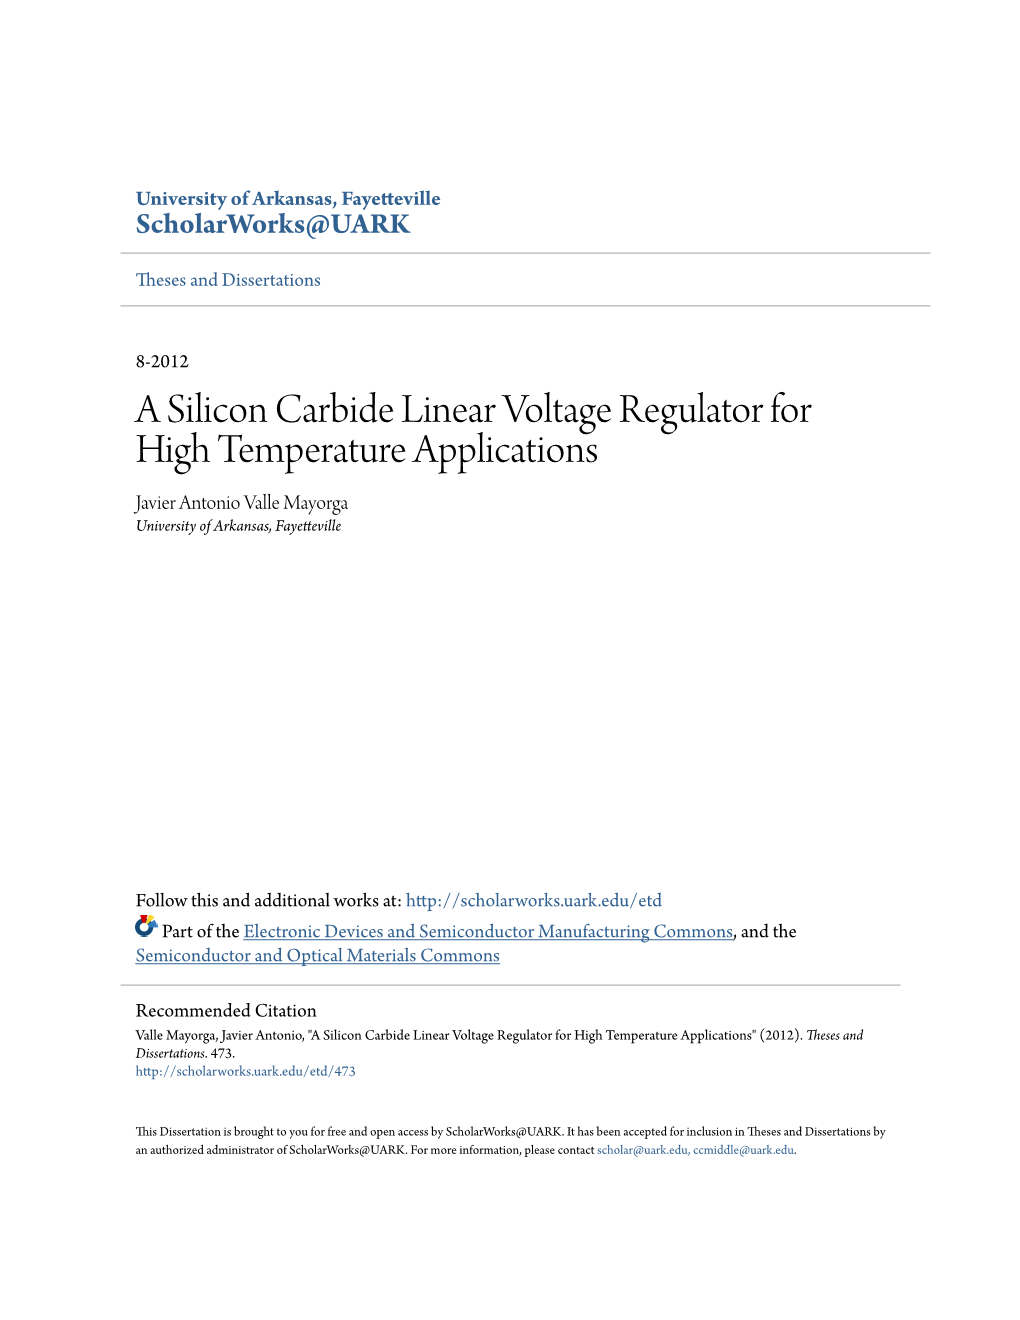 A Silicon Carbide Linear Voltage Regulator for High Temperature Applications Javier Antonio Valle Mayorga University of Arkansas, Fayetteville